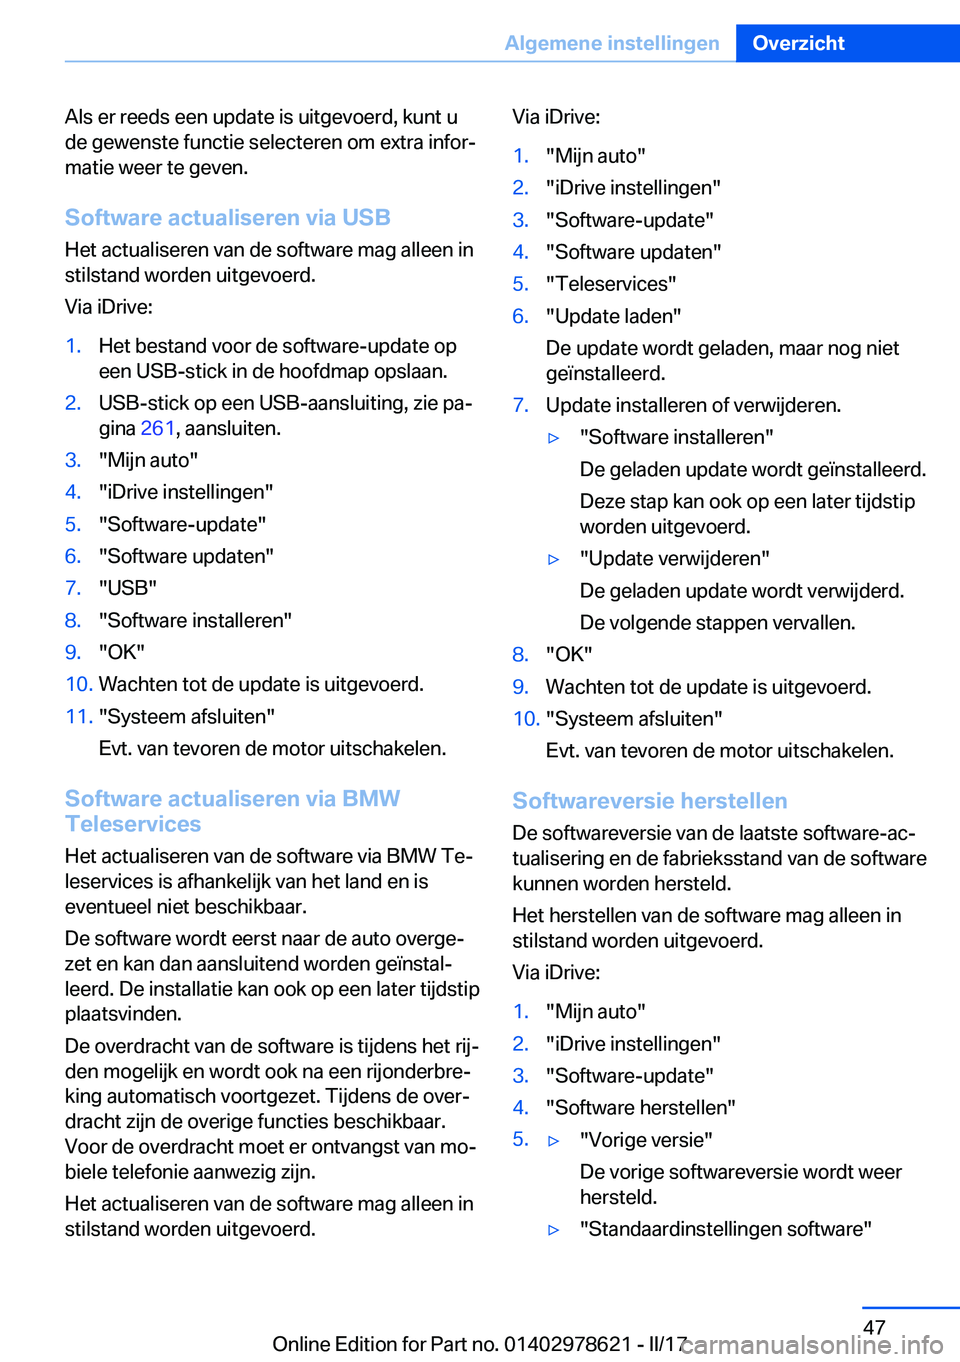 BMW 7 SERIES 2018  Instructieboekjes (in Dutch) �A�l�s� �e�r� �r�e�e�d�s� �e�e�n� �u�p�d�a�t�e� �i�s� �u�i�t�g�e�v�o�e�r�d�,� �k�u�n�t� �u�d�e� �g�e�w�e�n�s�t�e� �f�u�n�c�t�i�e� �s�e�l�e�c�t�e�r�e�n� �o�m� �e�x�t�r�a� �i�n�f�o�rj�m�a�t�i�e� �w�e�e